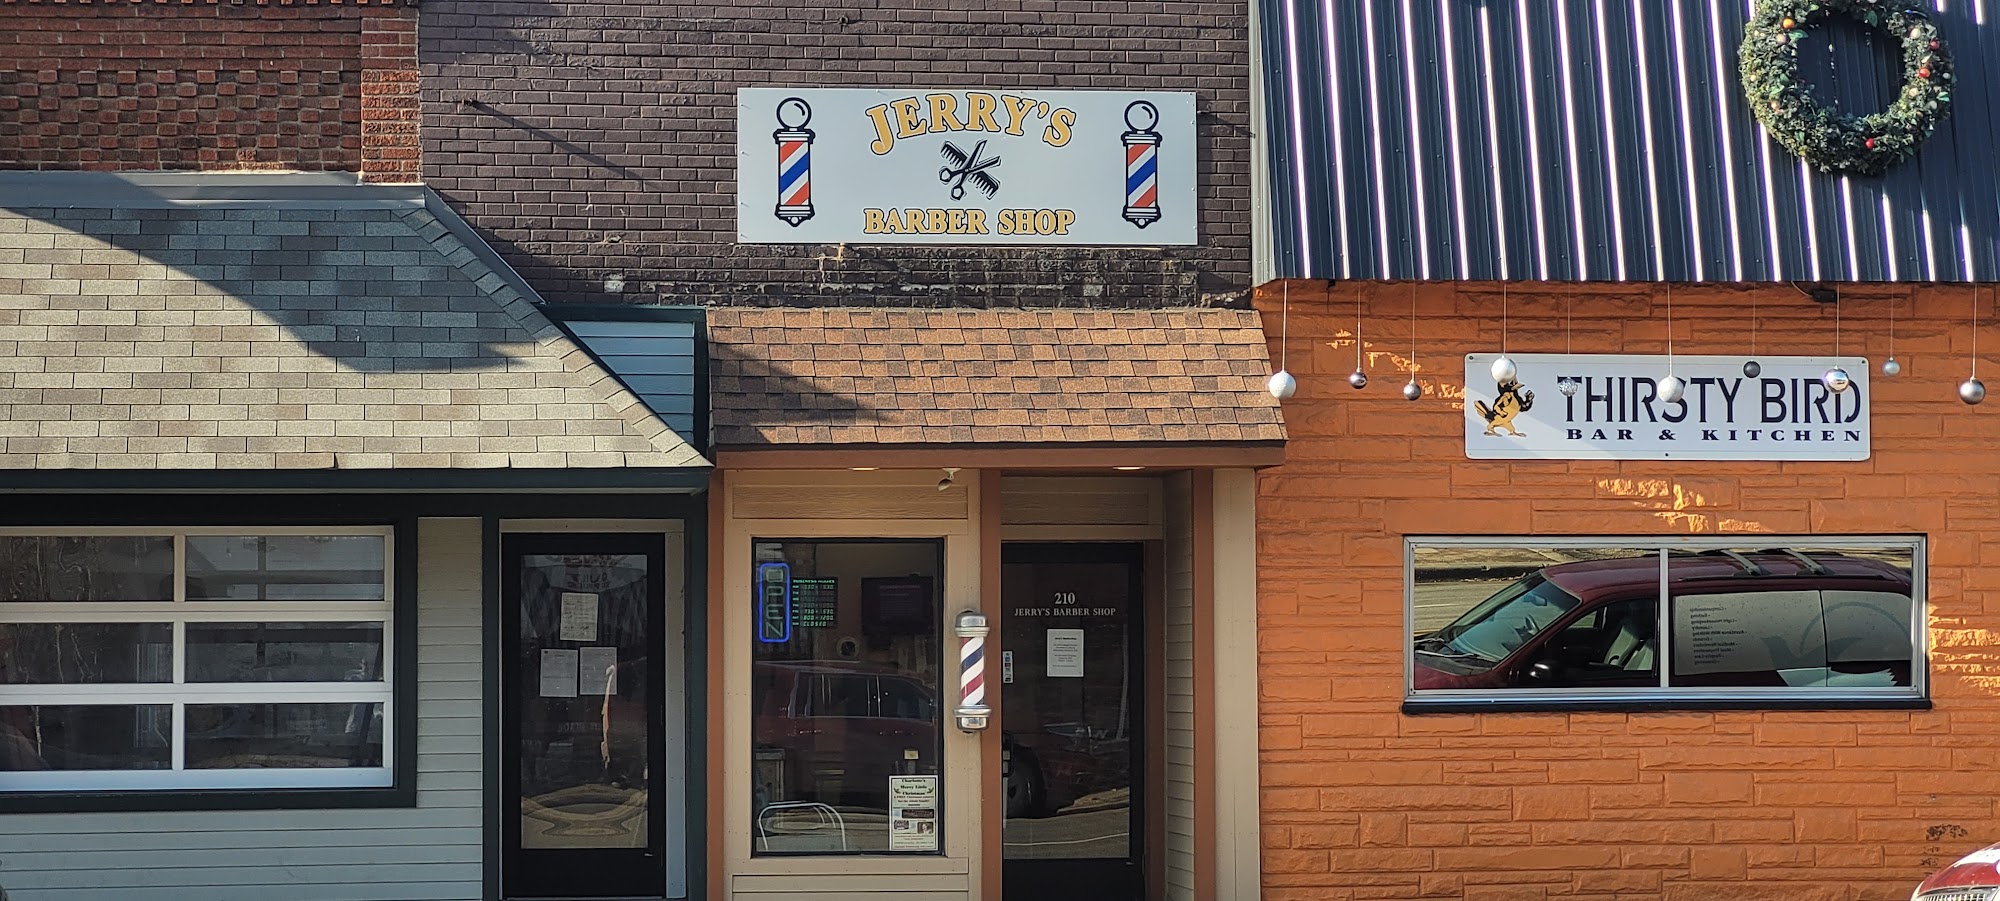 Jerry's Barbershop 212 S Cochran Ave, Charlotte Michigan 48813